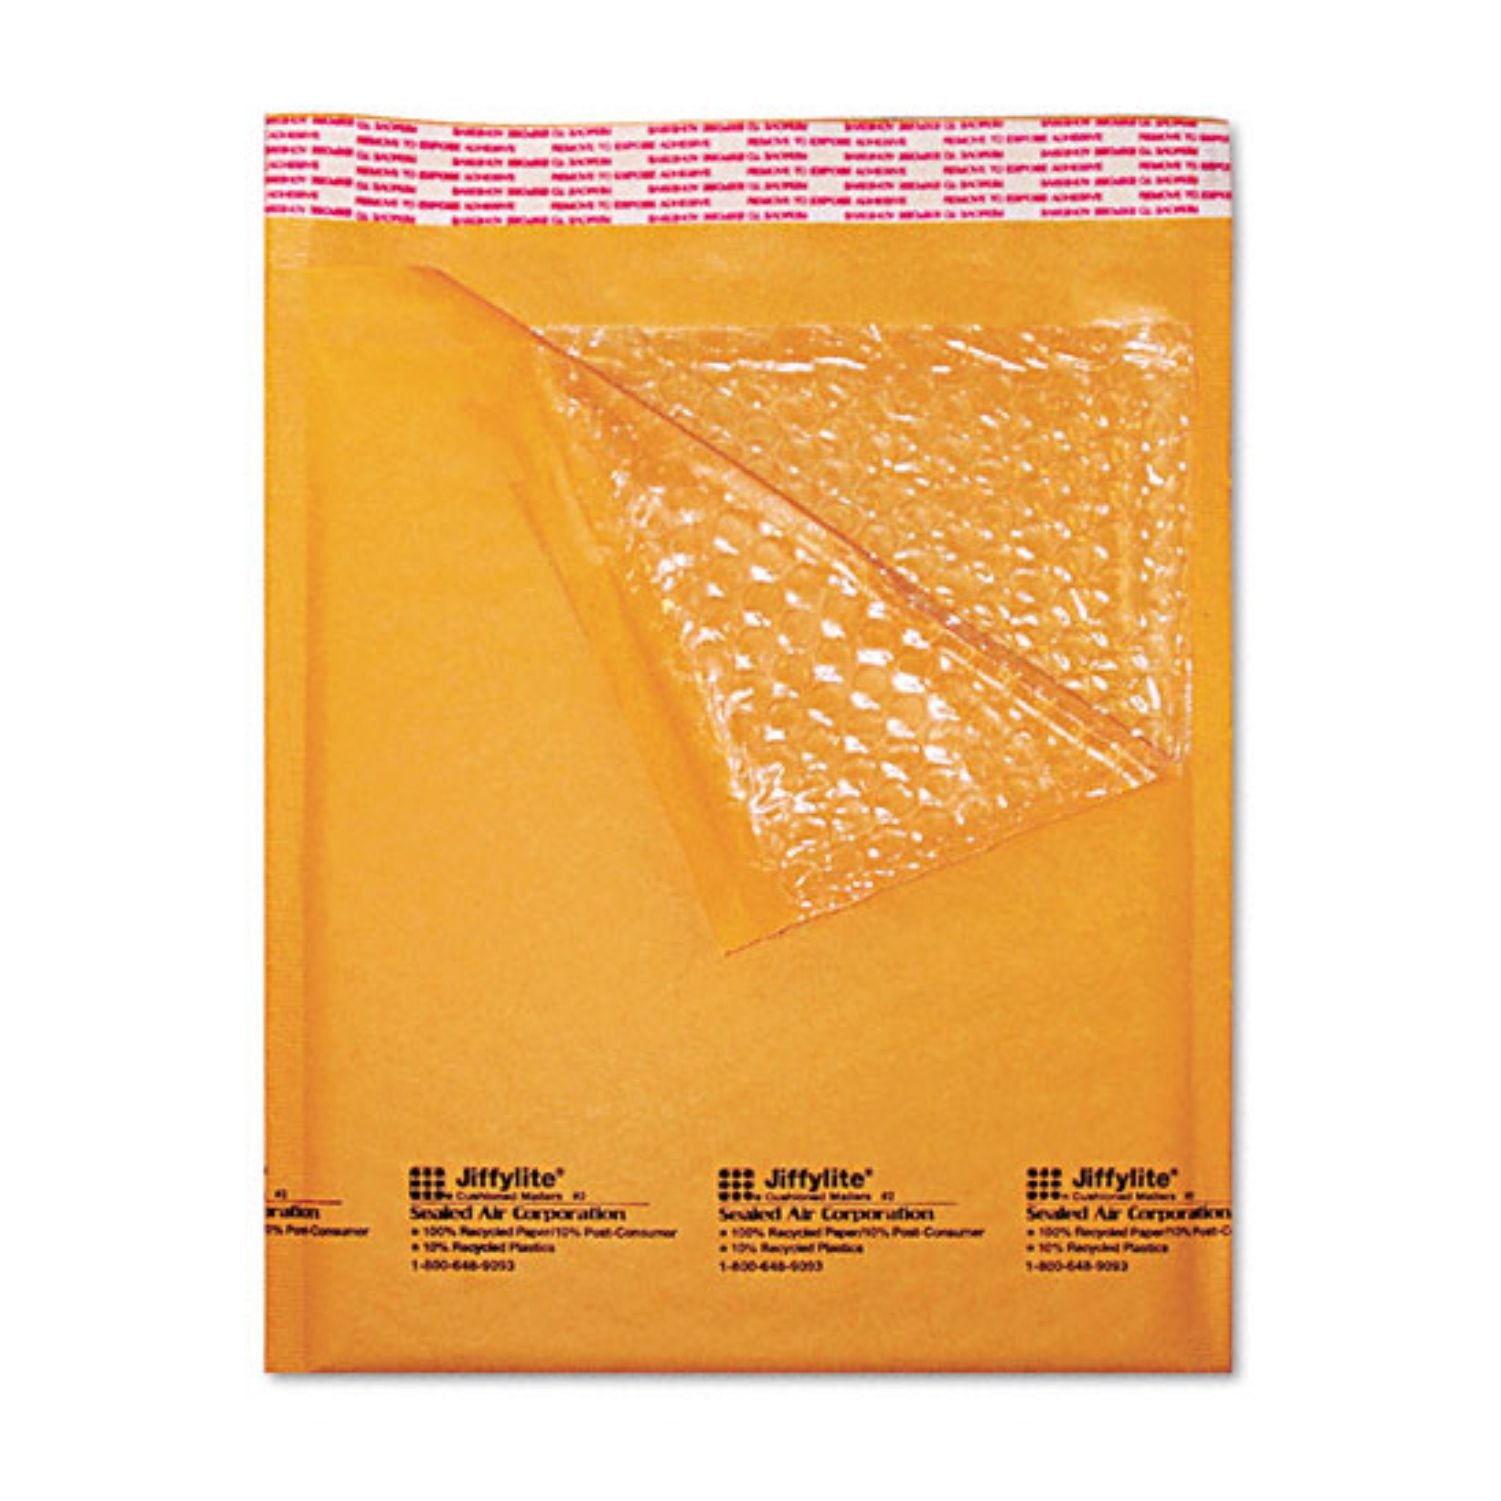 Stamp Mailing Envelopes - Rubber Stamp Materials